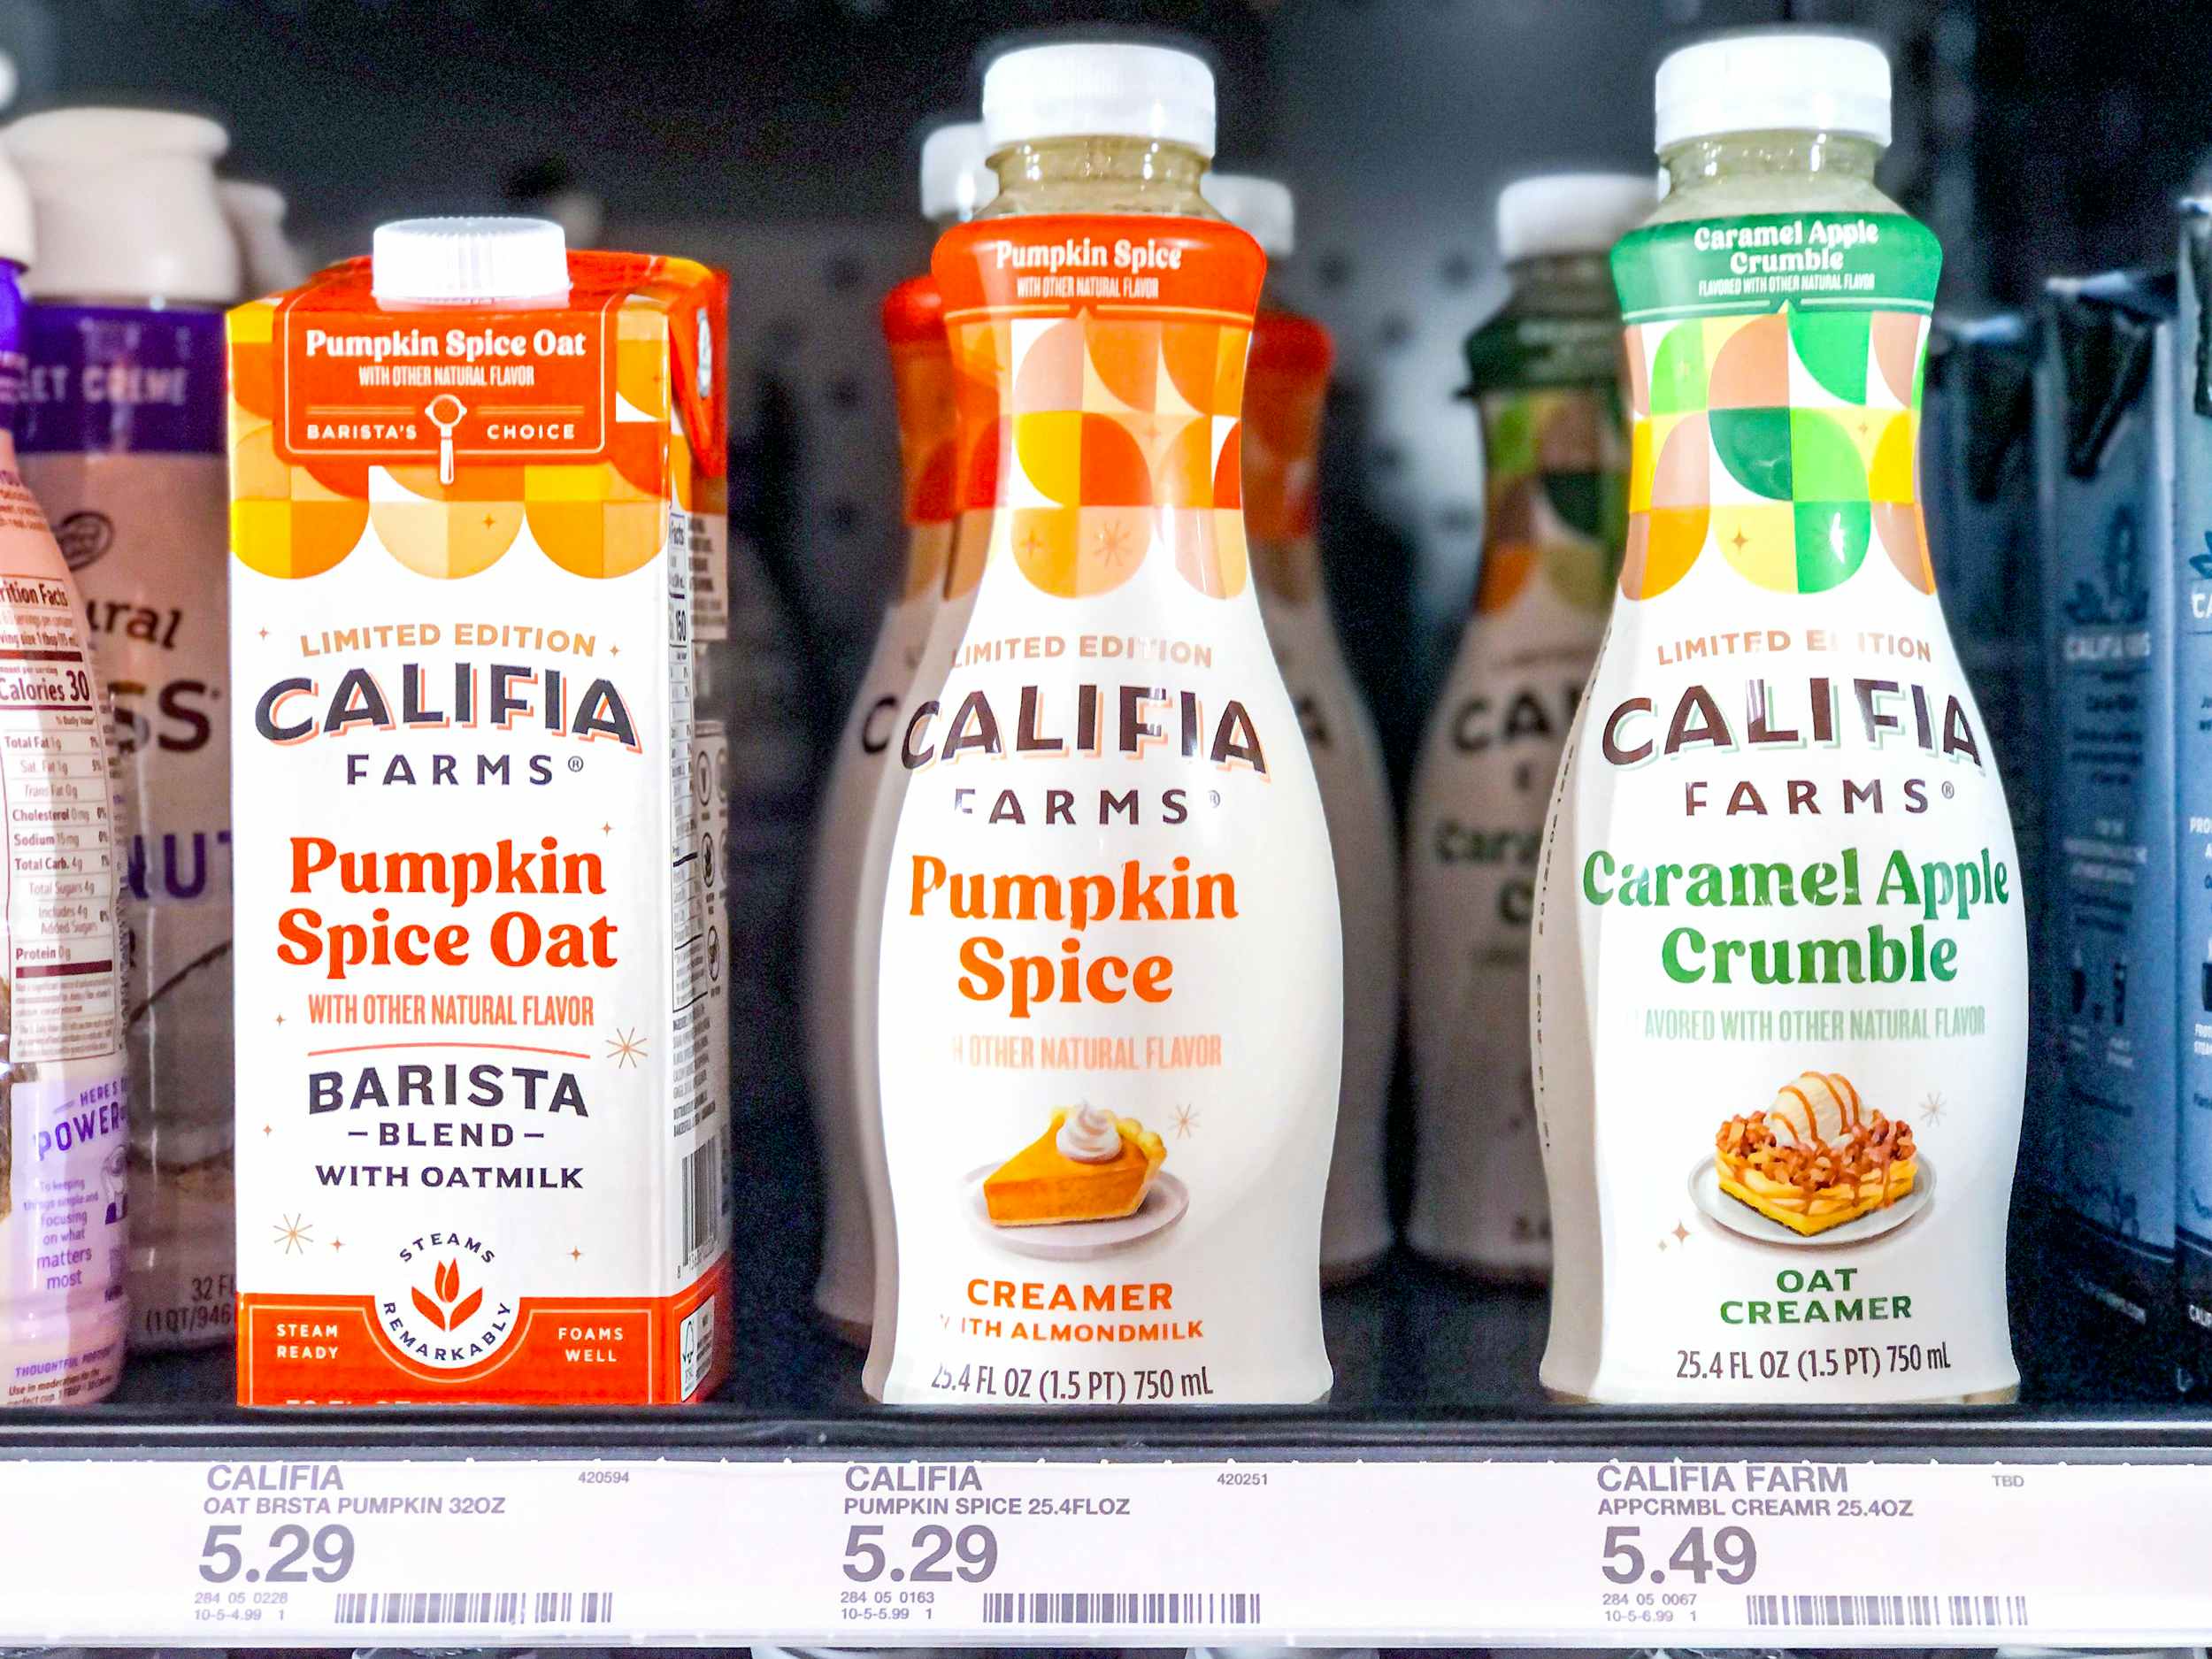 califia farms pumpkin spice oat milk and caramel apple crumble coffee creamer in store refrigerator